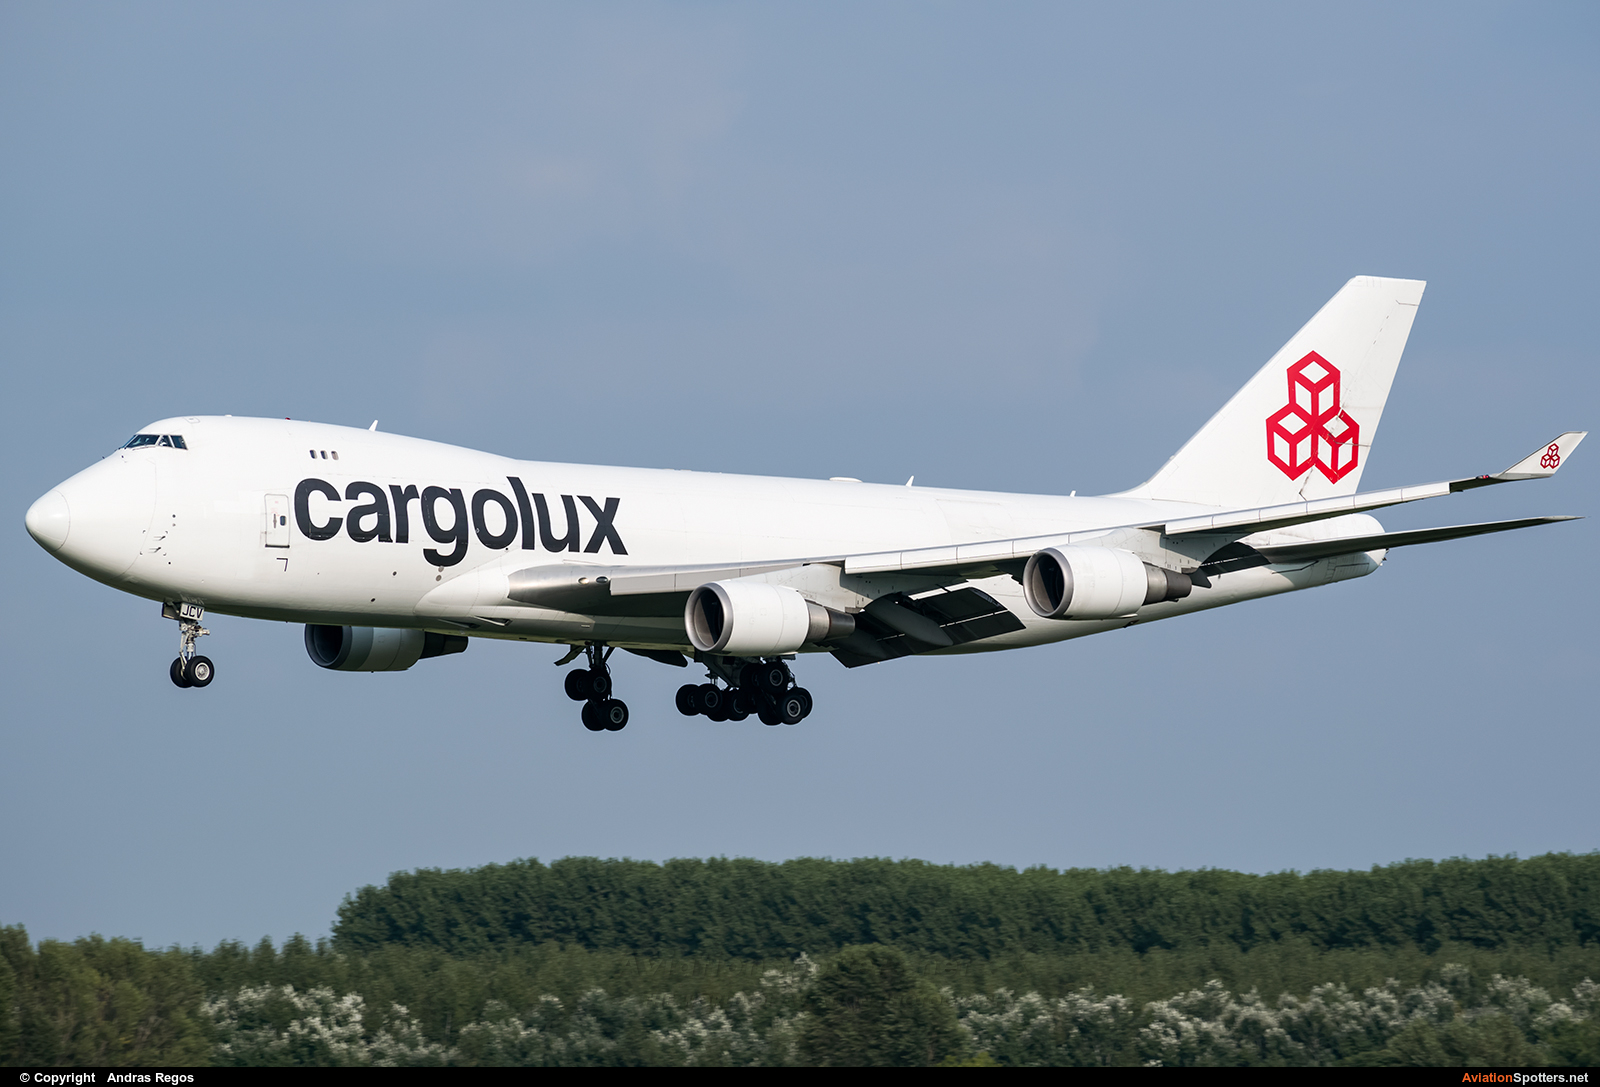 Cargolux  -  747-400ER  (LX-JCV) By Andras Regos (regos)